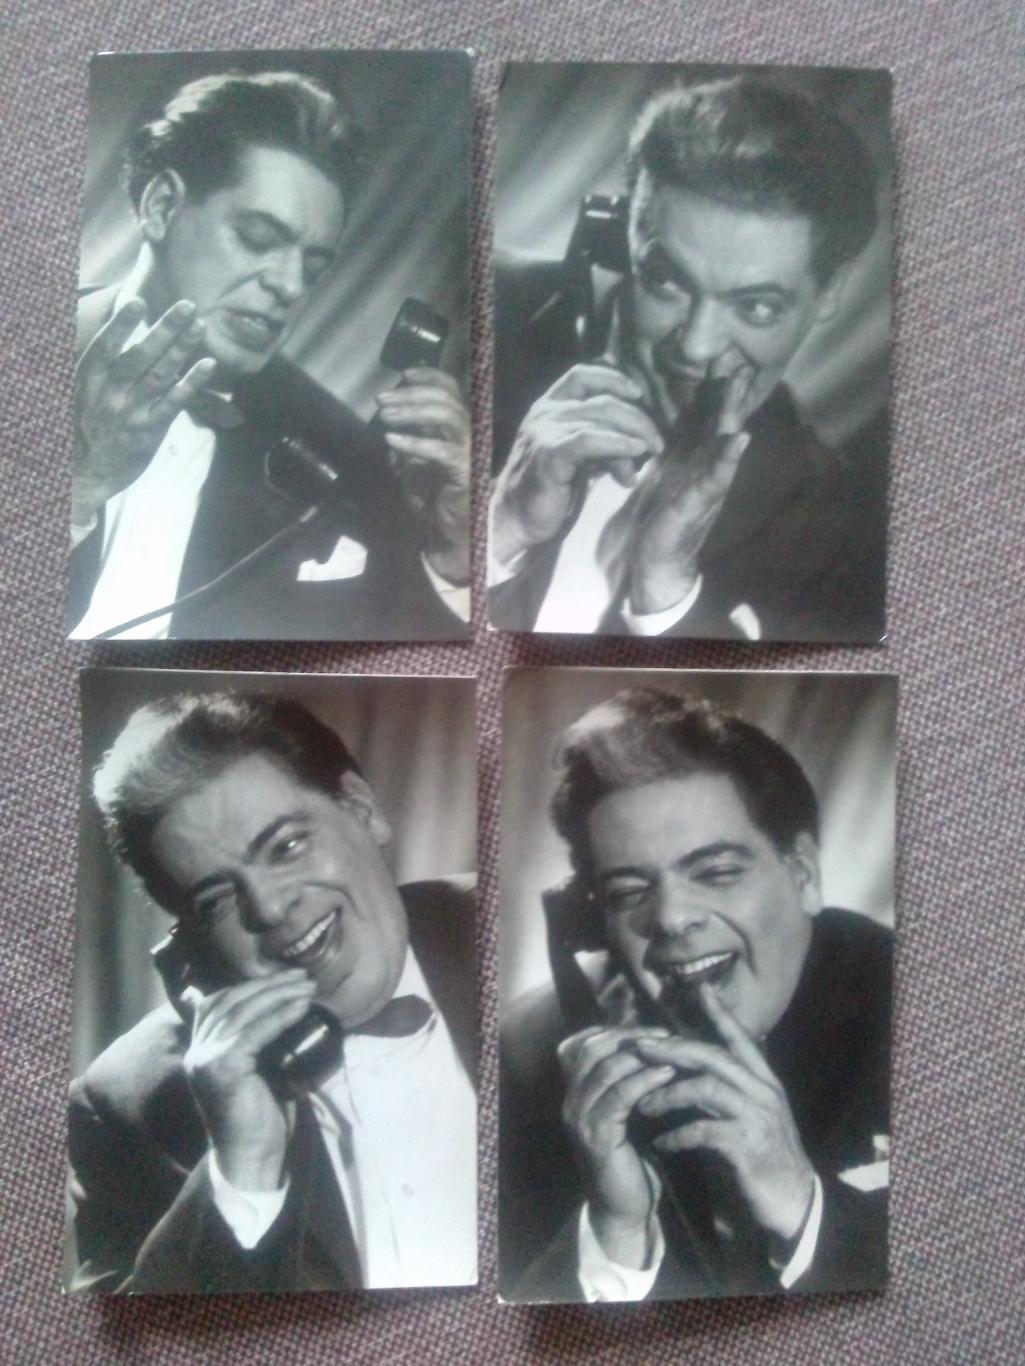 Народный артист РСФСР : Аркадий Райкин 1964 г. полный набор - 16 фотооткрыток 4